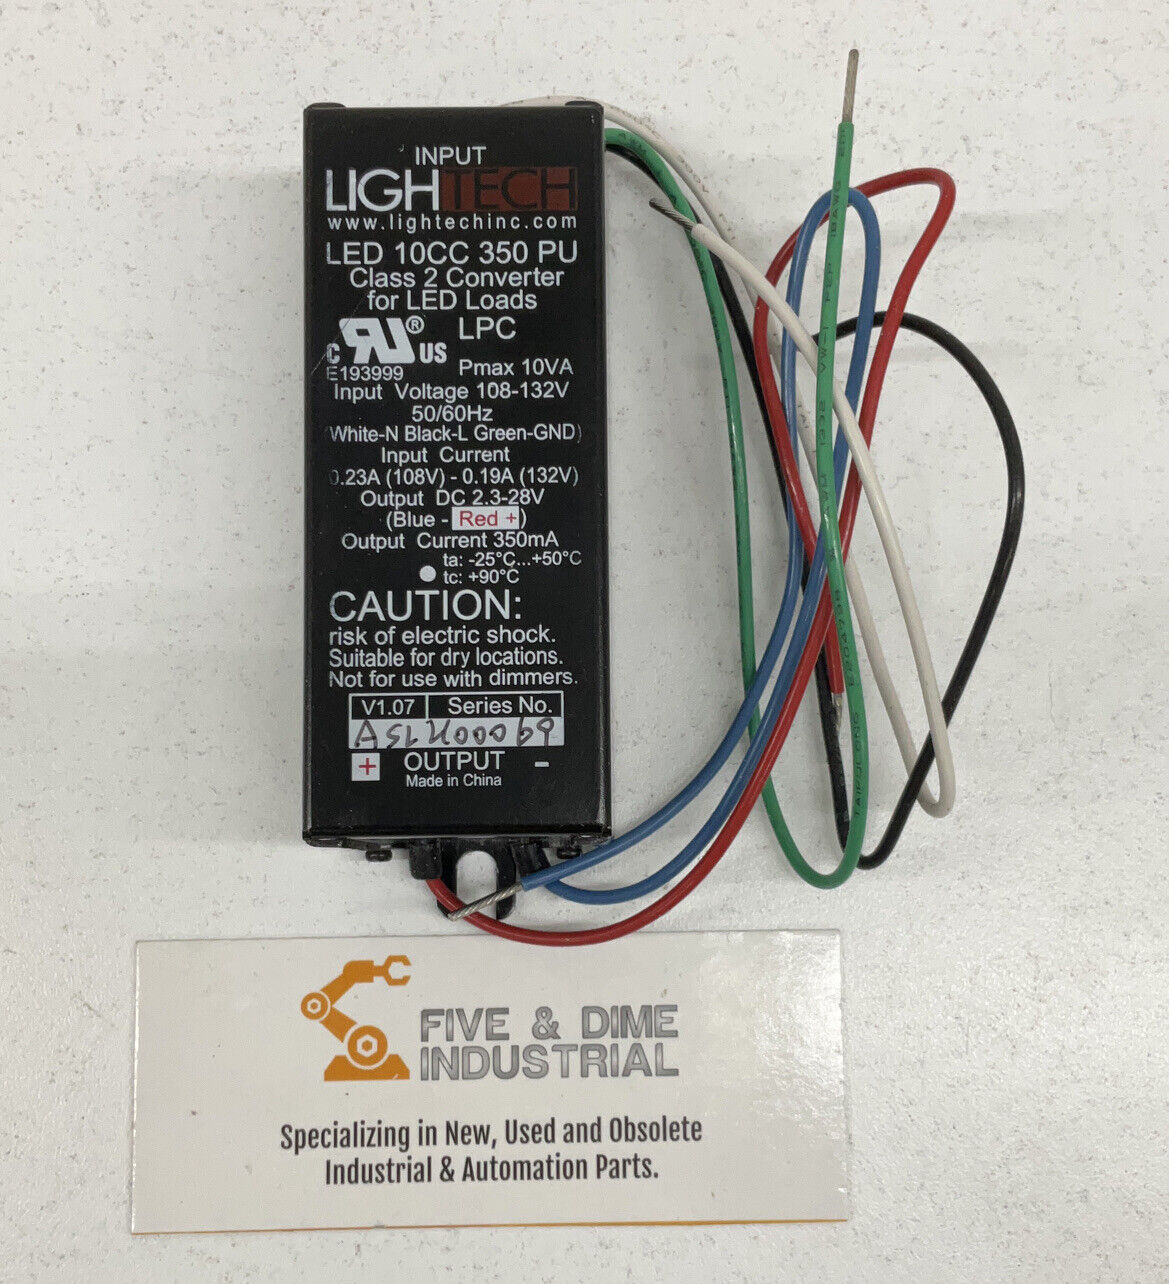 Lightech LED-10 Input 132V Output 28V Transformer (BL218)